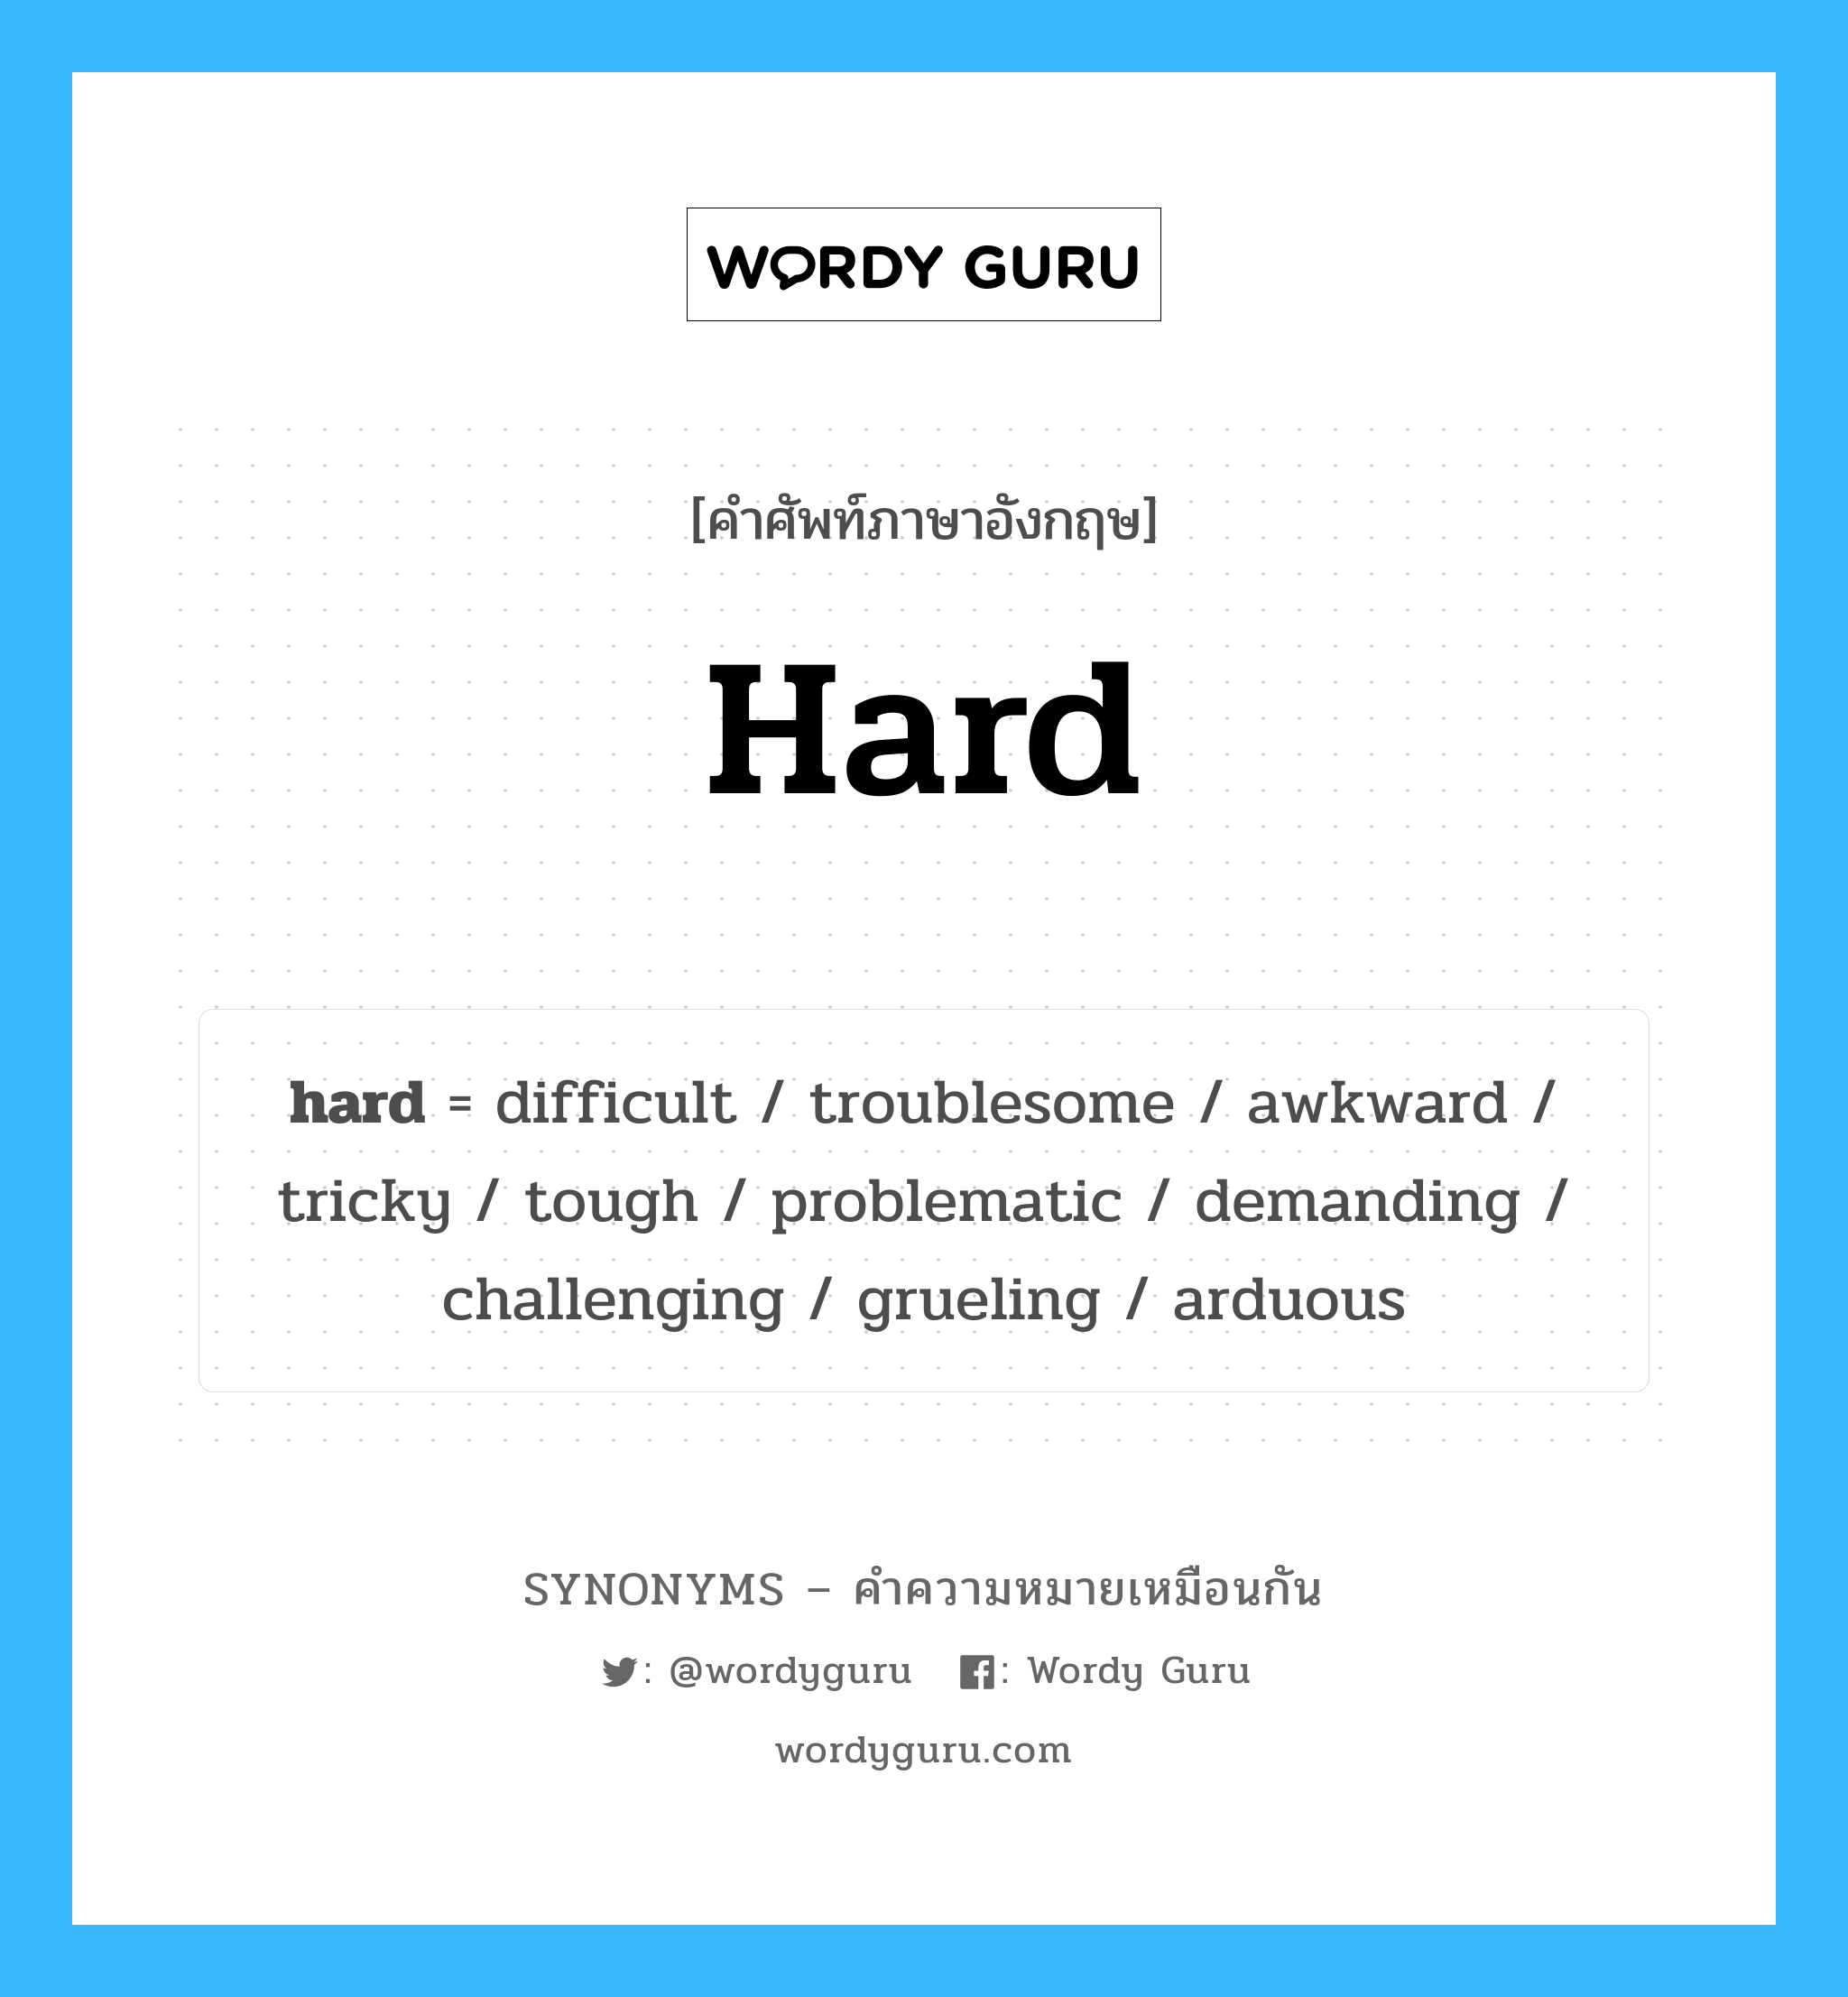 hard เป็นหนึ่งใน demanding และมีคำอื่น ๆ อีกดังนี้, คำศัพท์ภาษาอังกฤษ hard ความหมายคล้ายกันกับ demanding แปลว่า ความต้องการ หมวด demanding